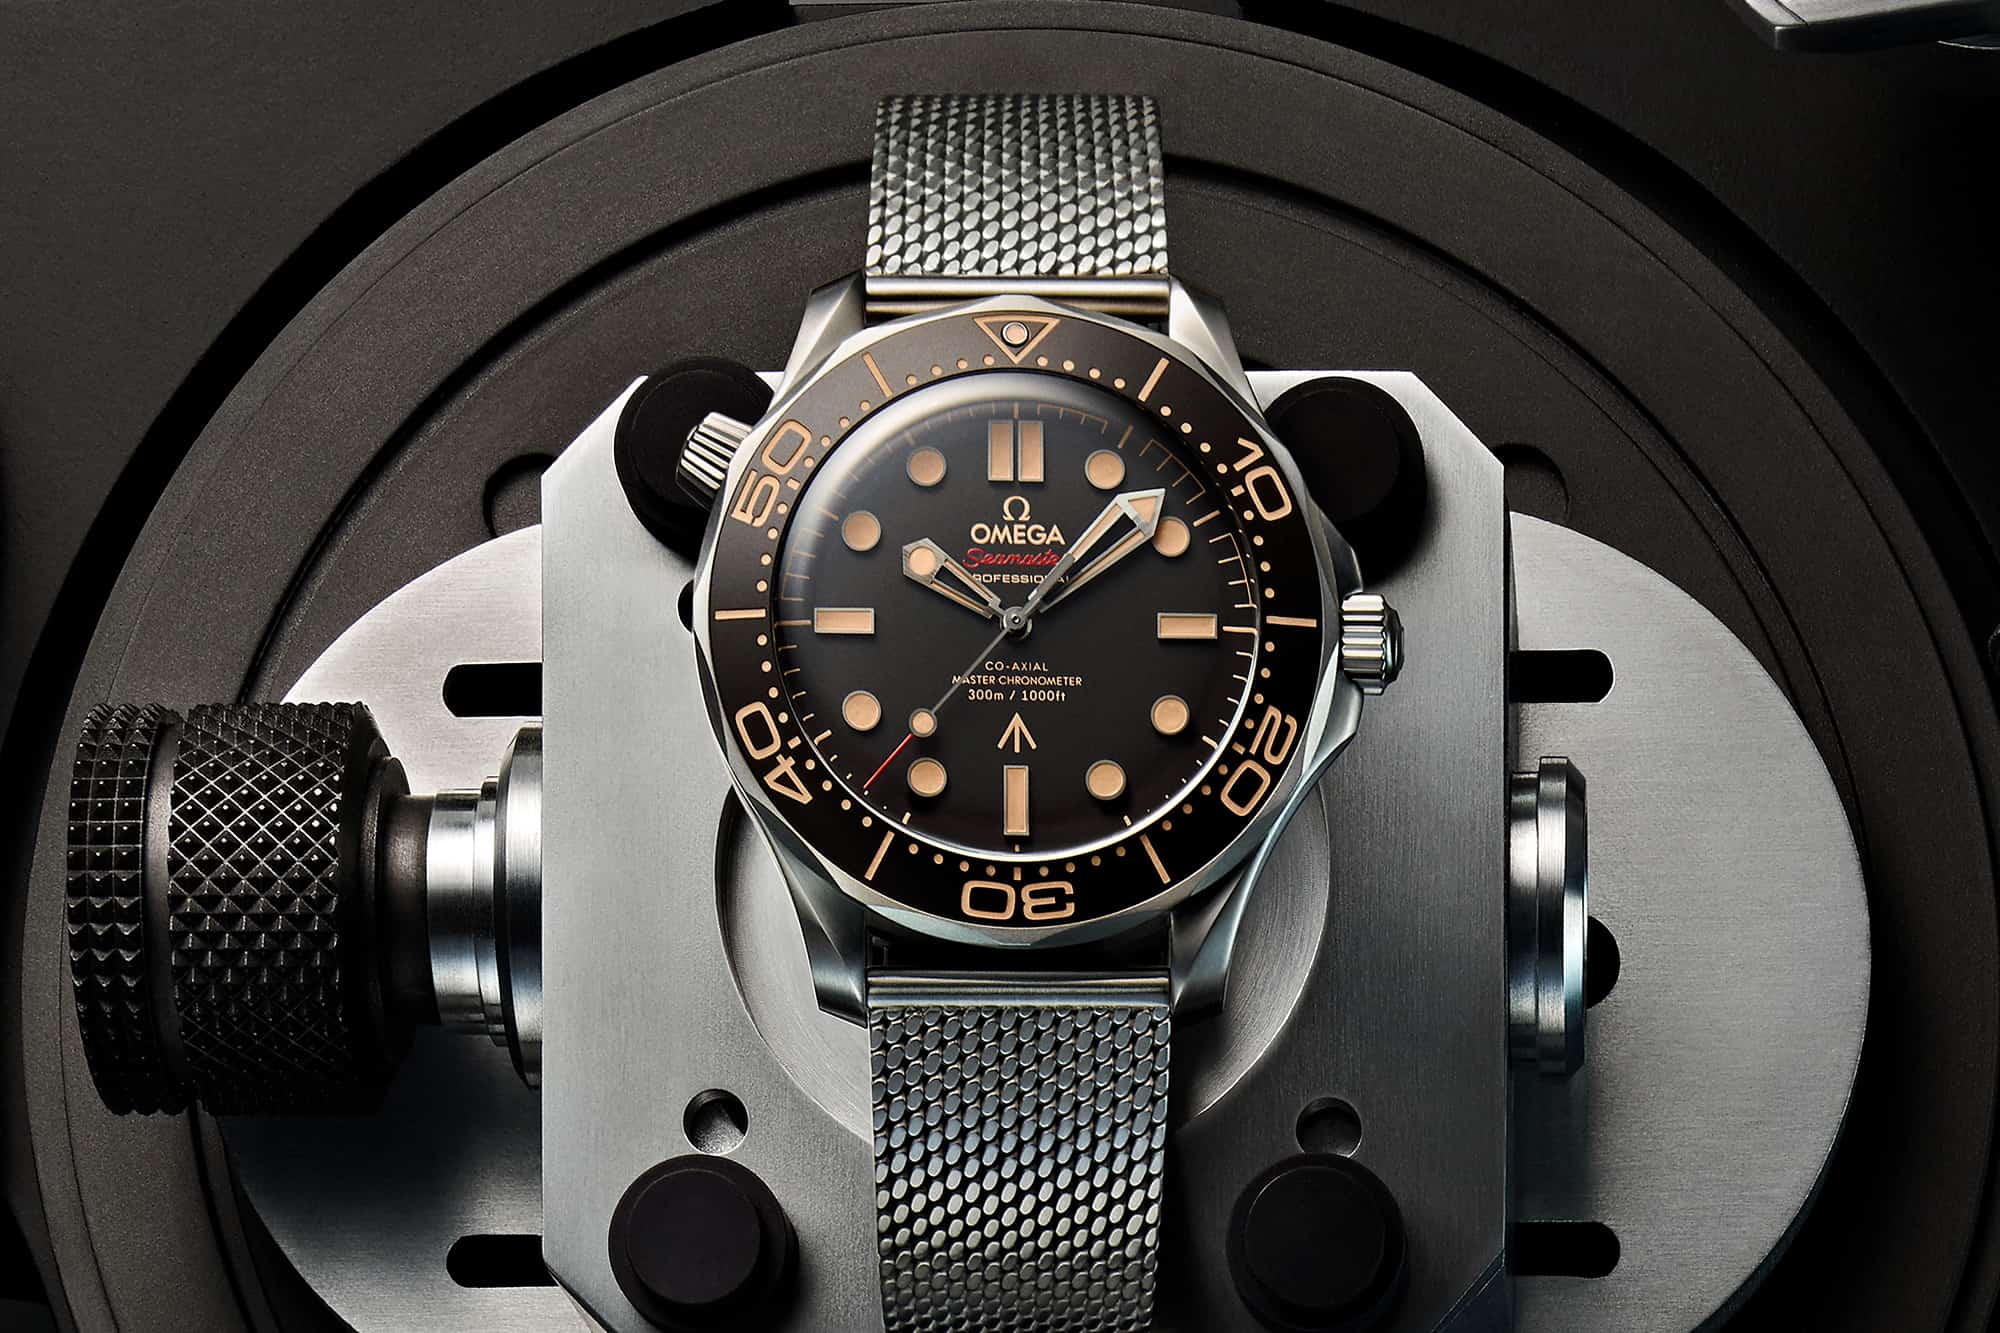 007 watch price